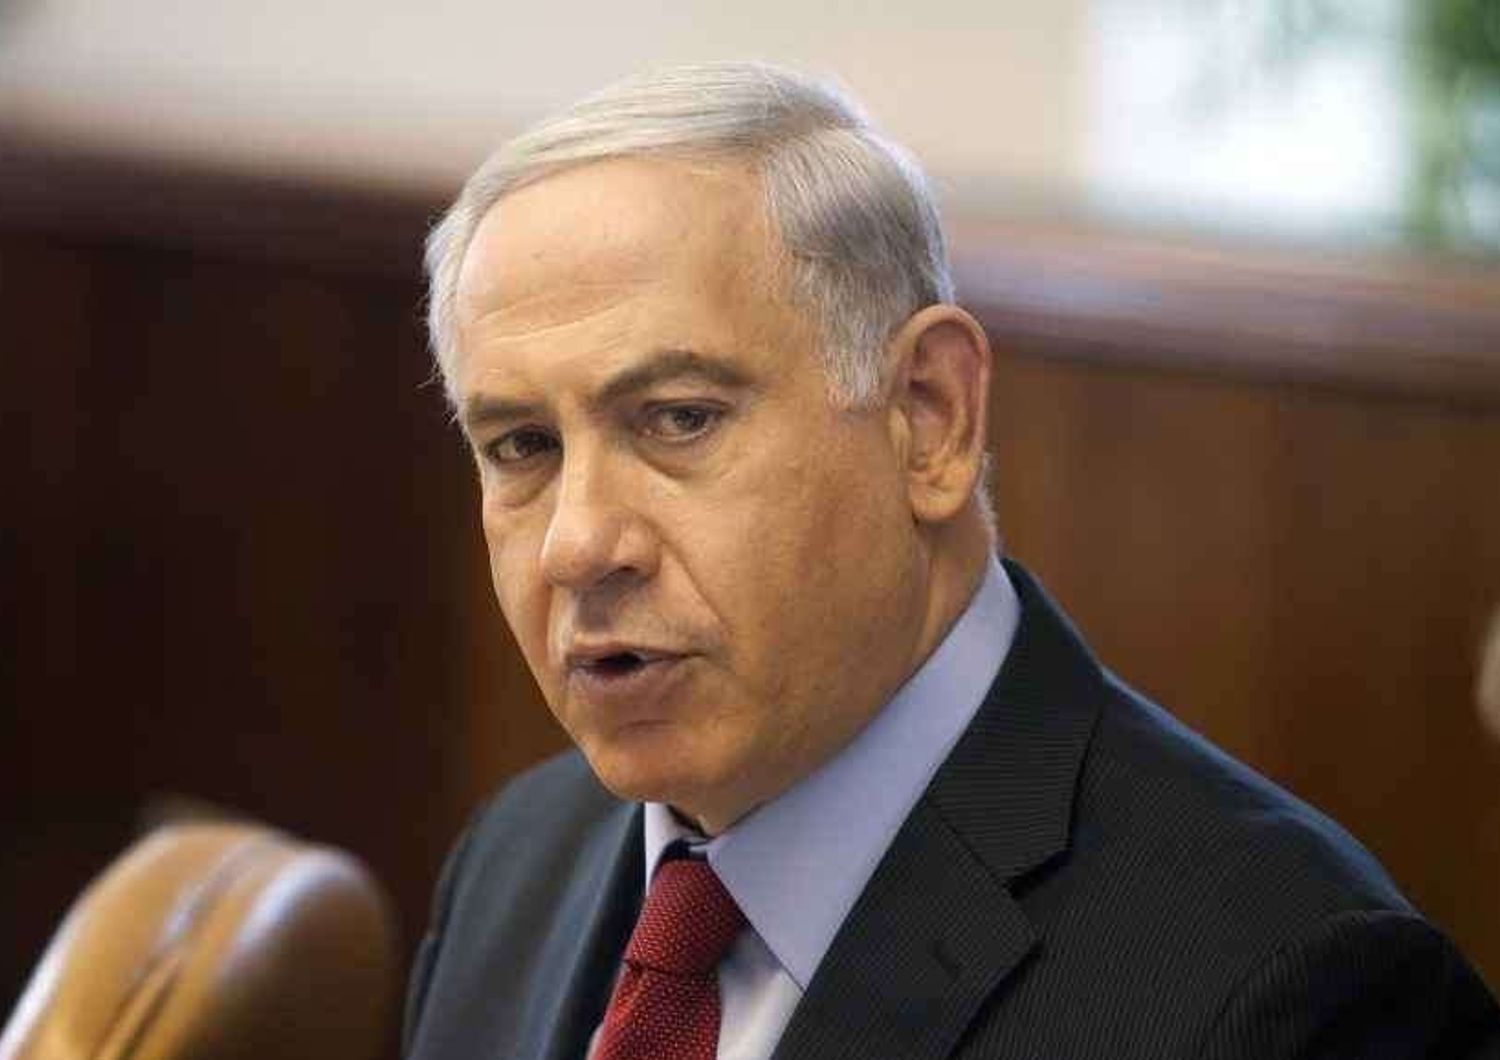 Netanyahu: "Hamas paghera' per assassinio dei tre giovani"